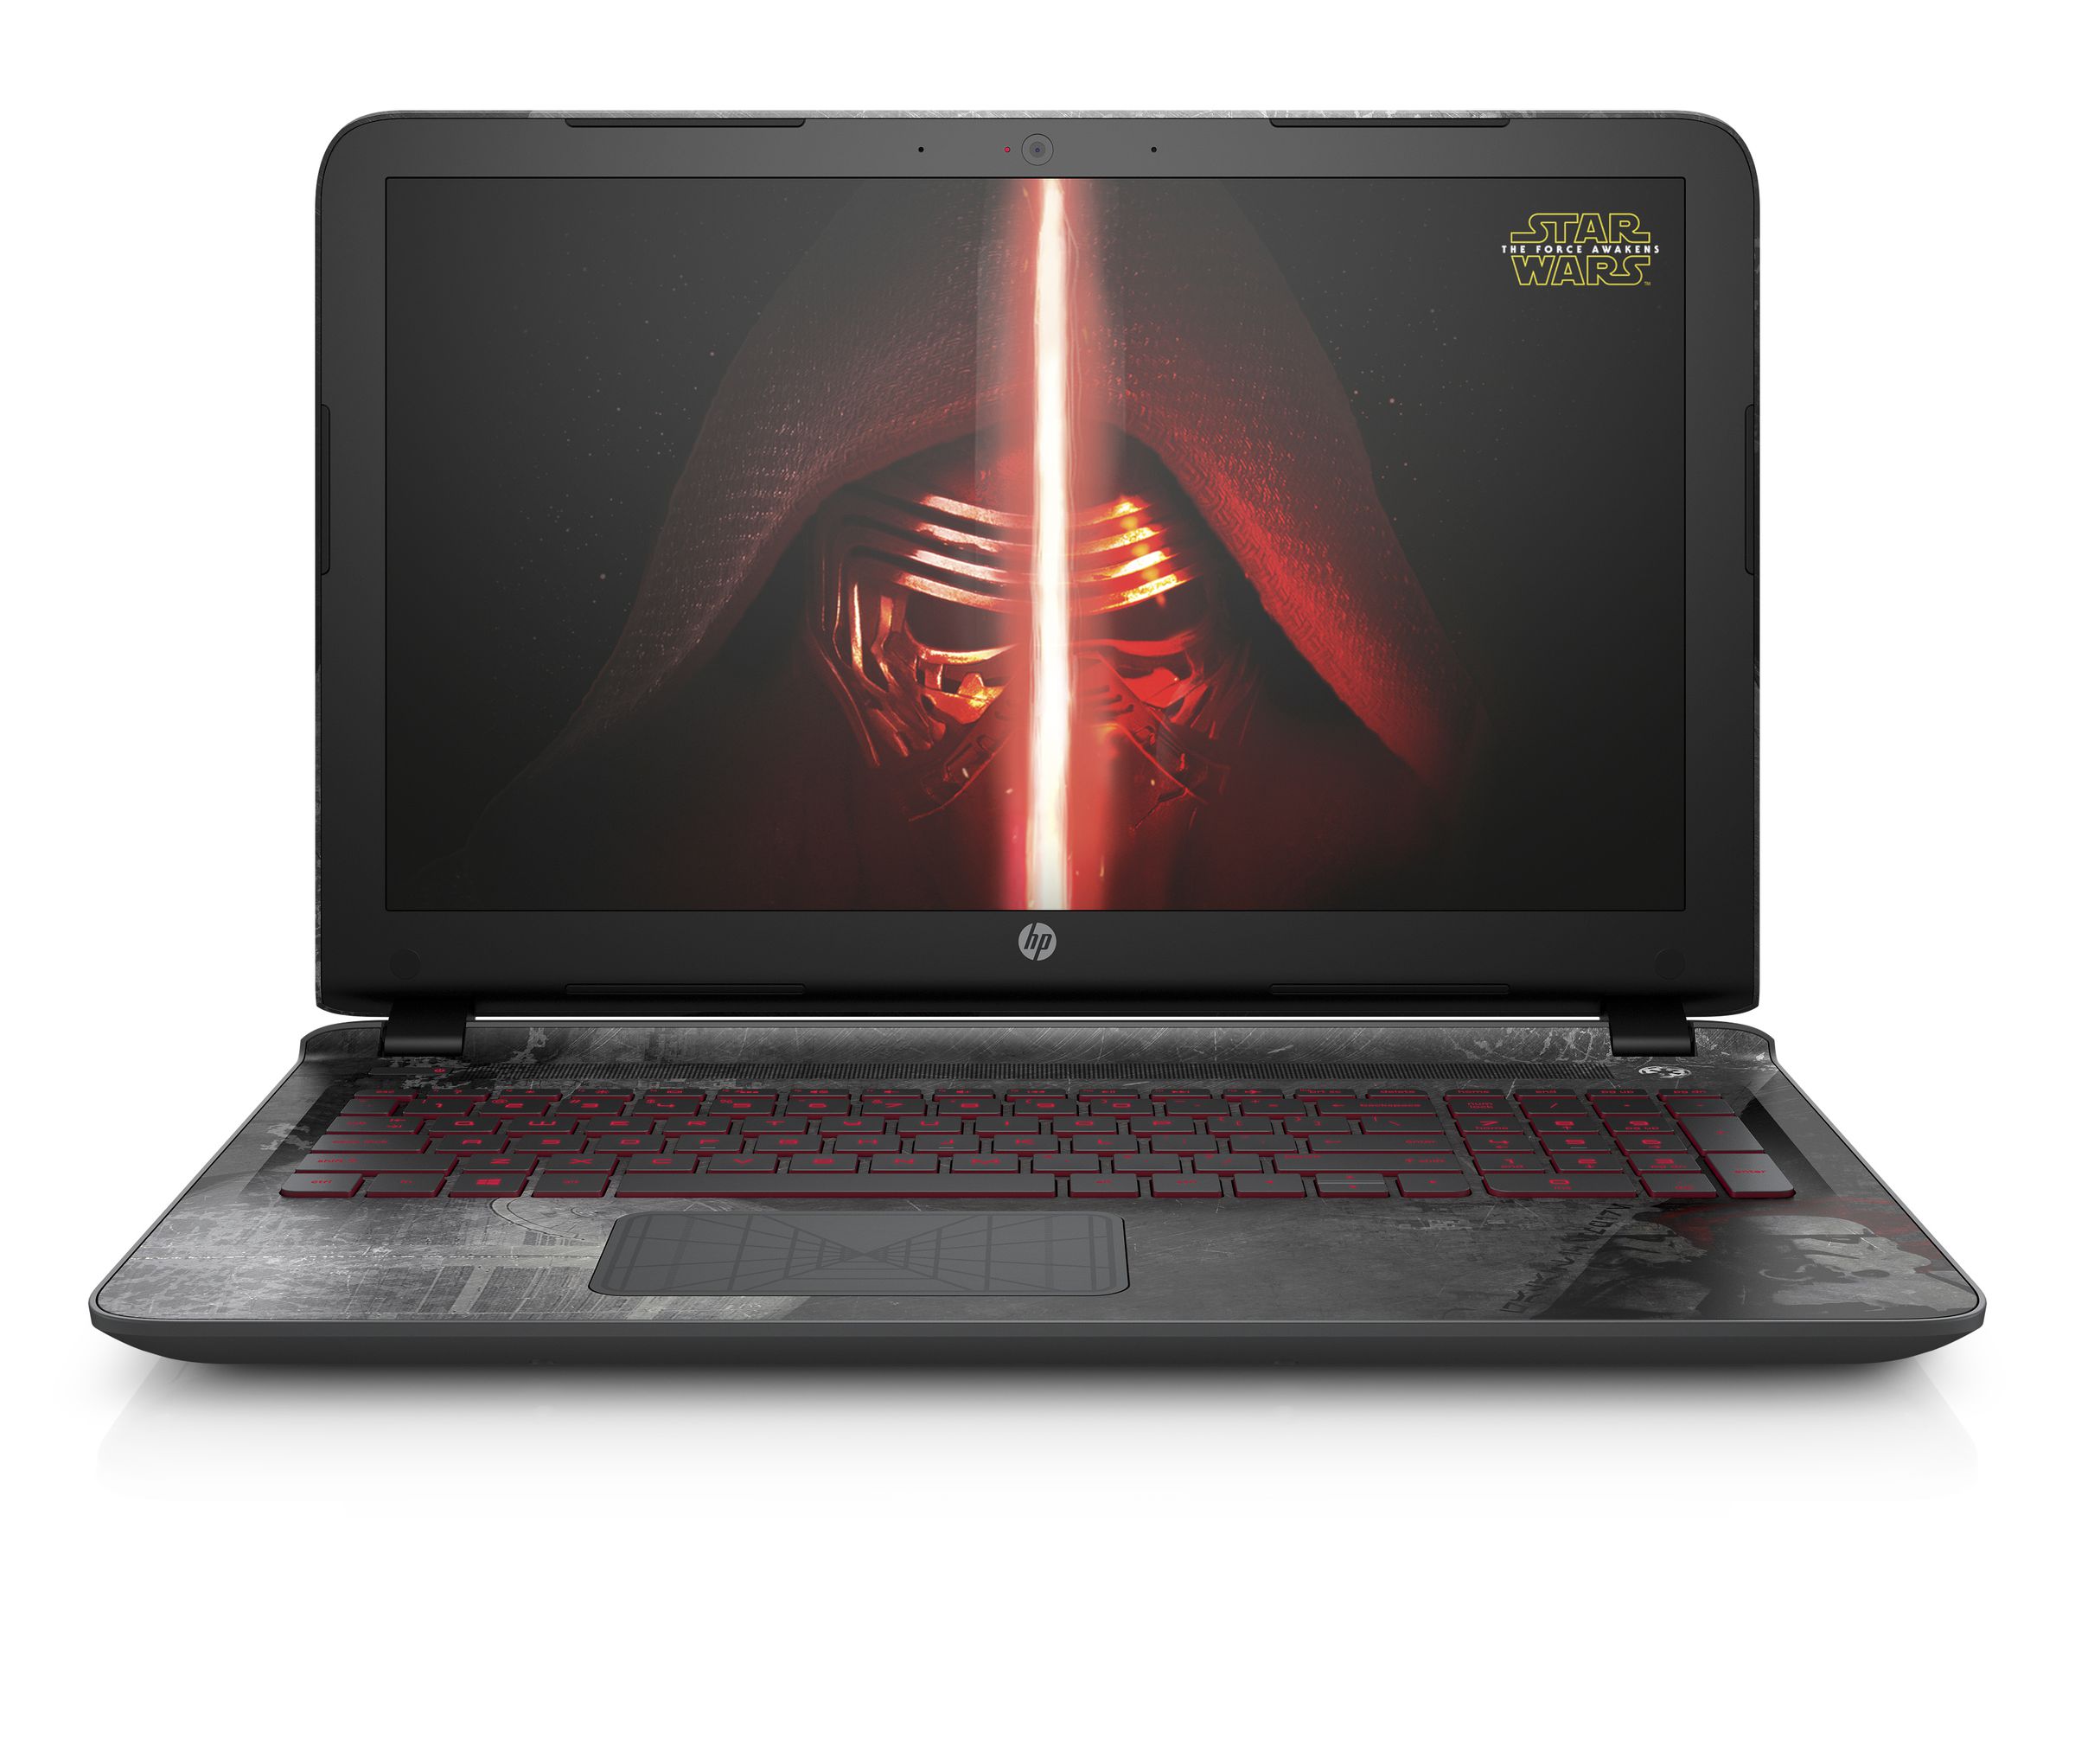 HP Star Wars laptop